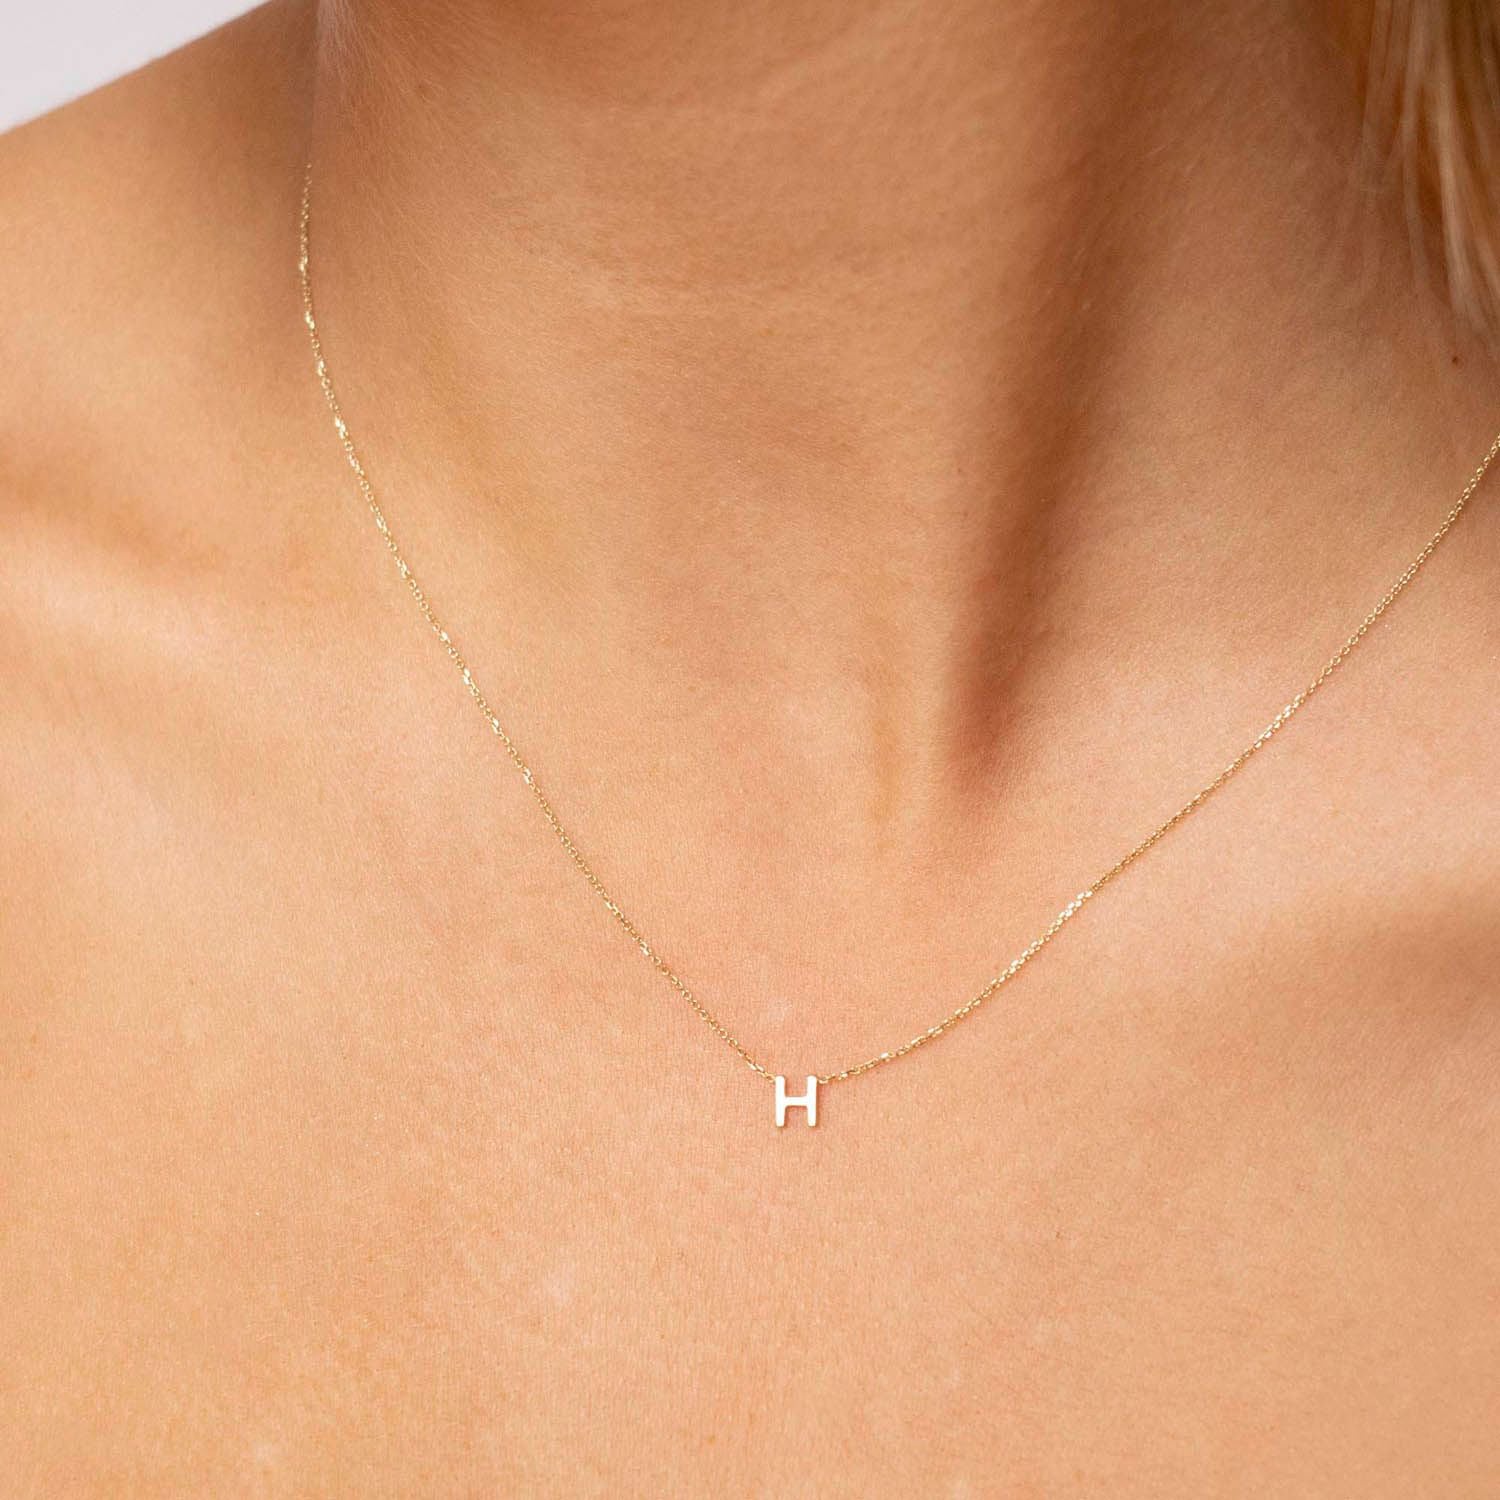 Buy/Send H Initial Pendant Gold Necklace Online- FNP